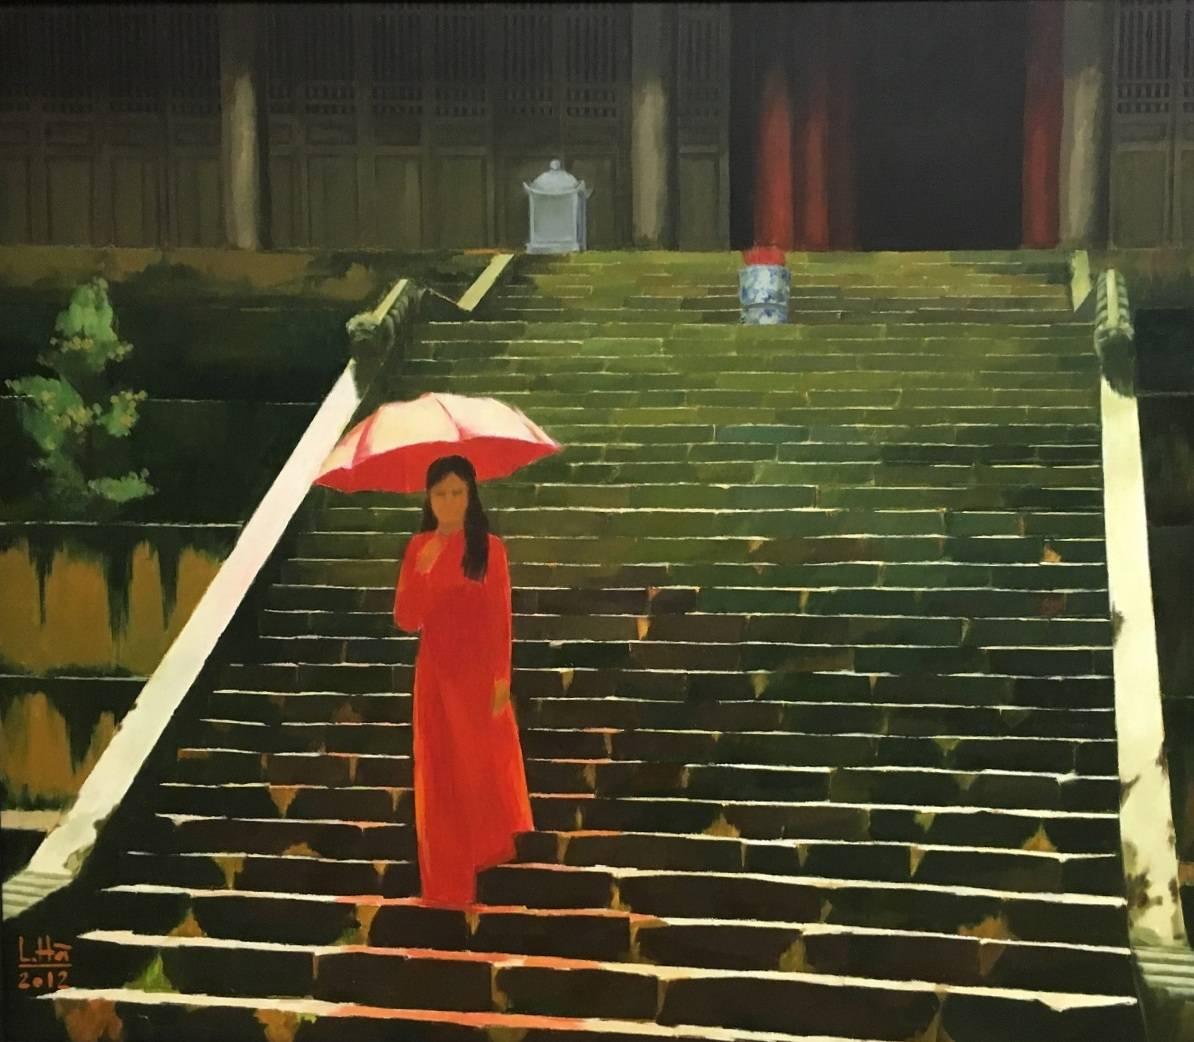 Le Nhu Ha Figurative Painting - 'Red Umbrella' Contemporary Vietnamese Oil Painting